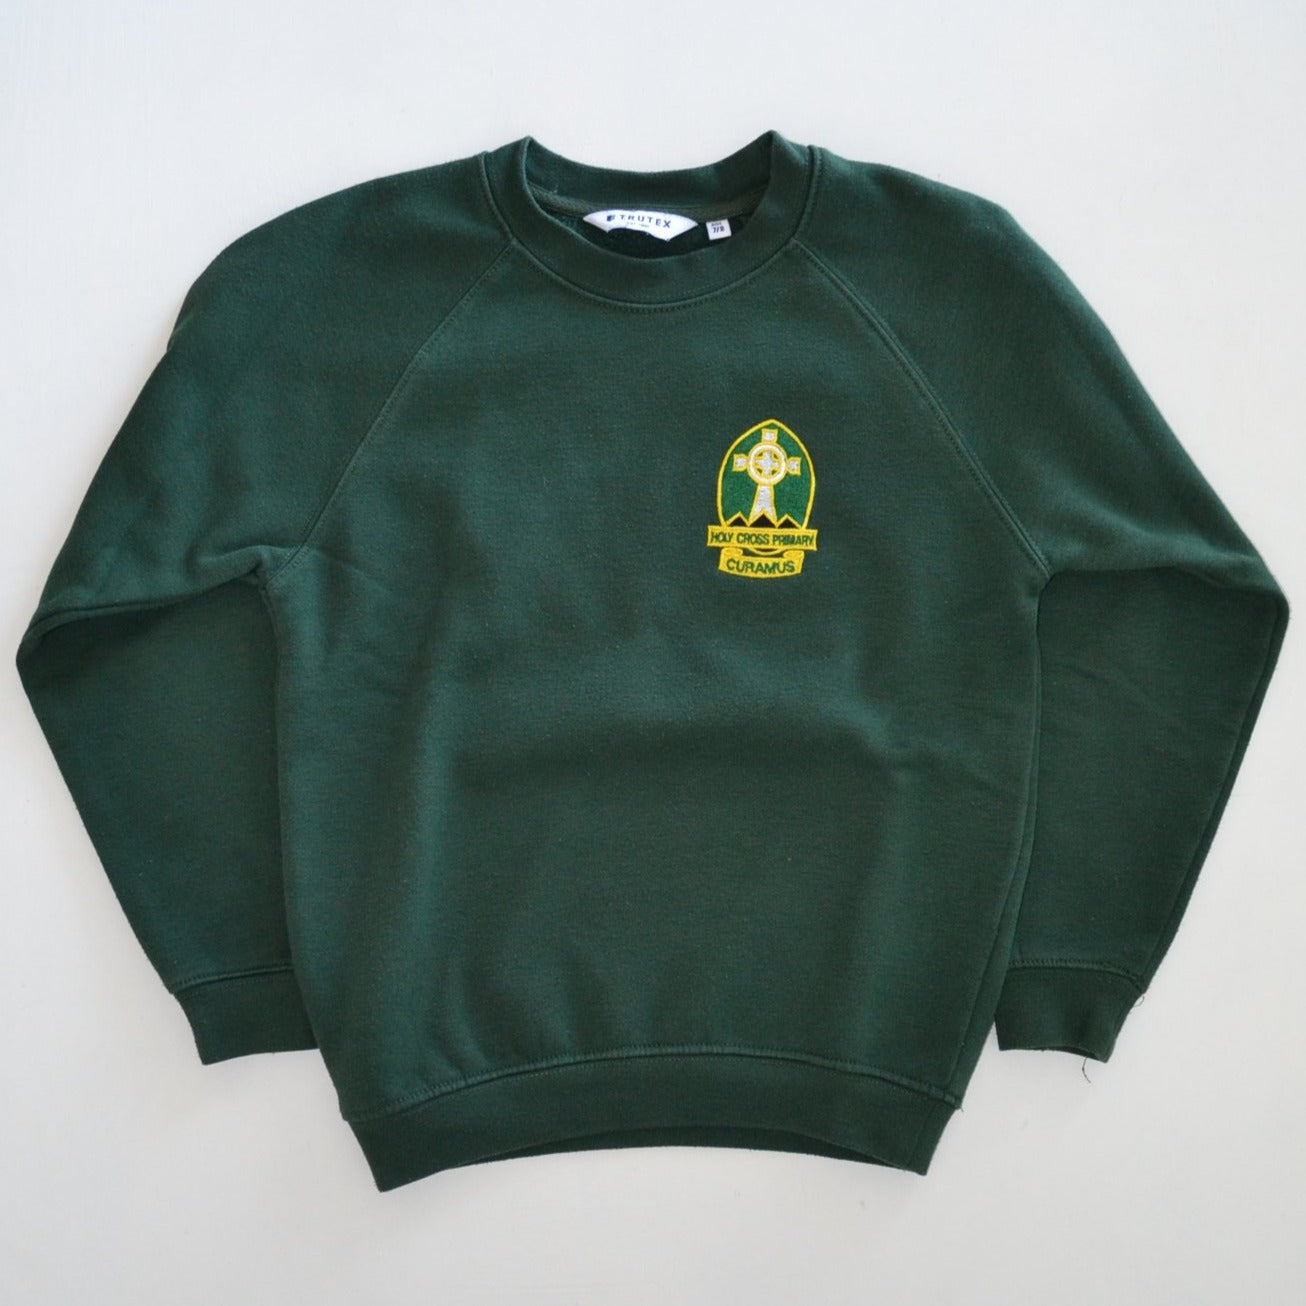 Holy Cross Primary - Sweatshirt - Green Crew Neck